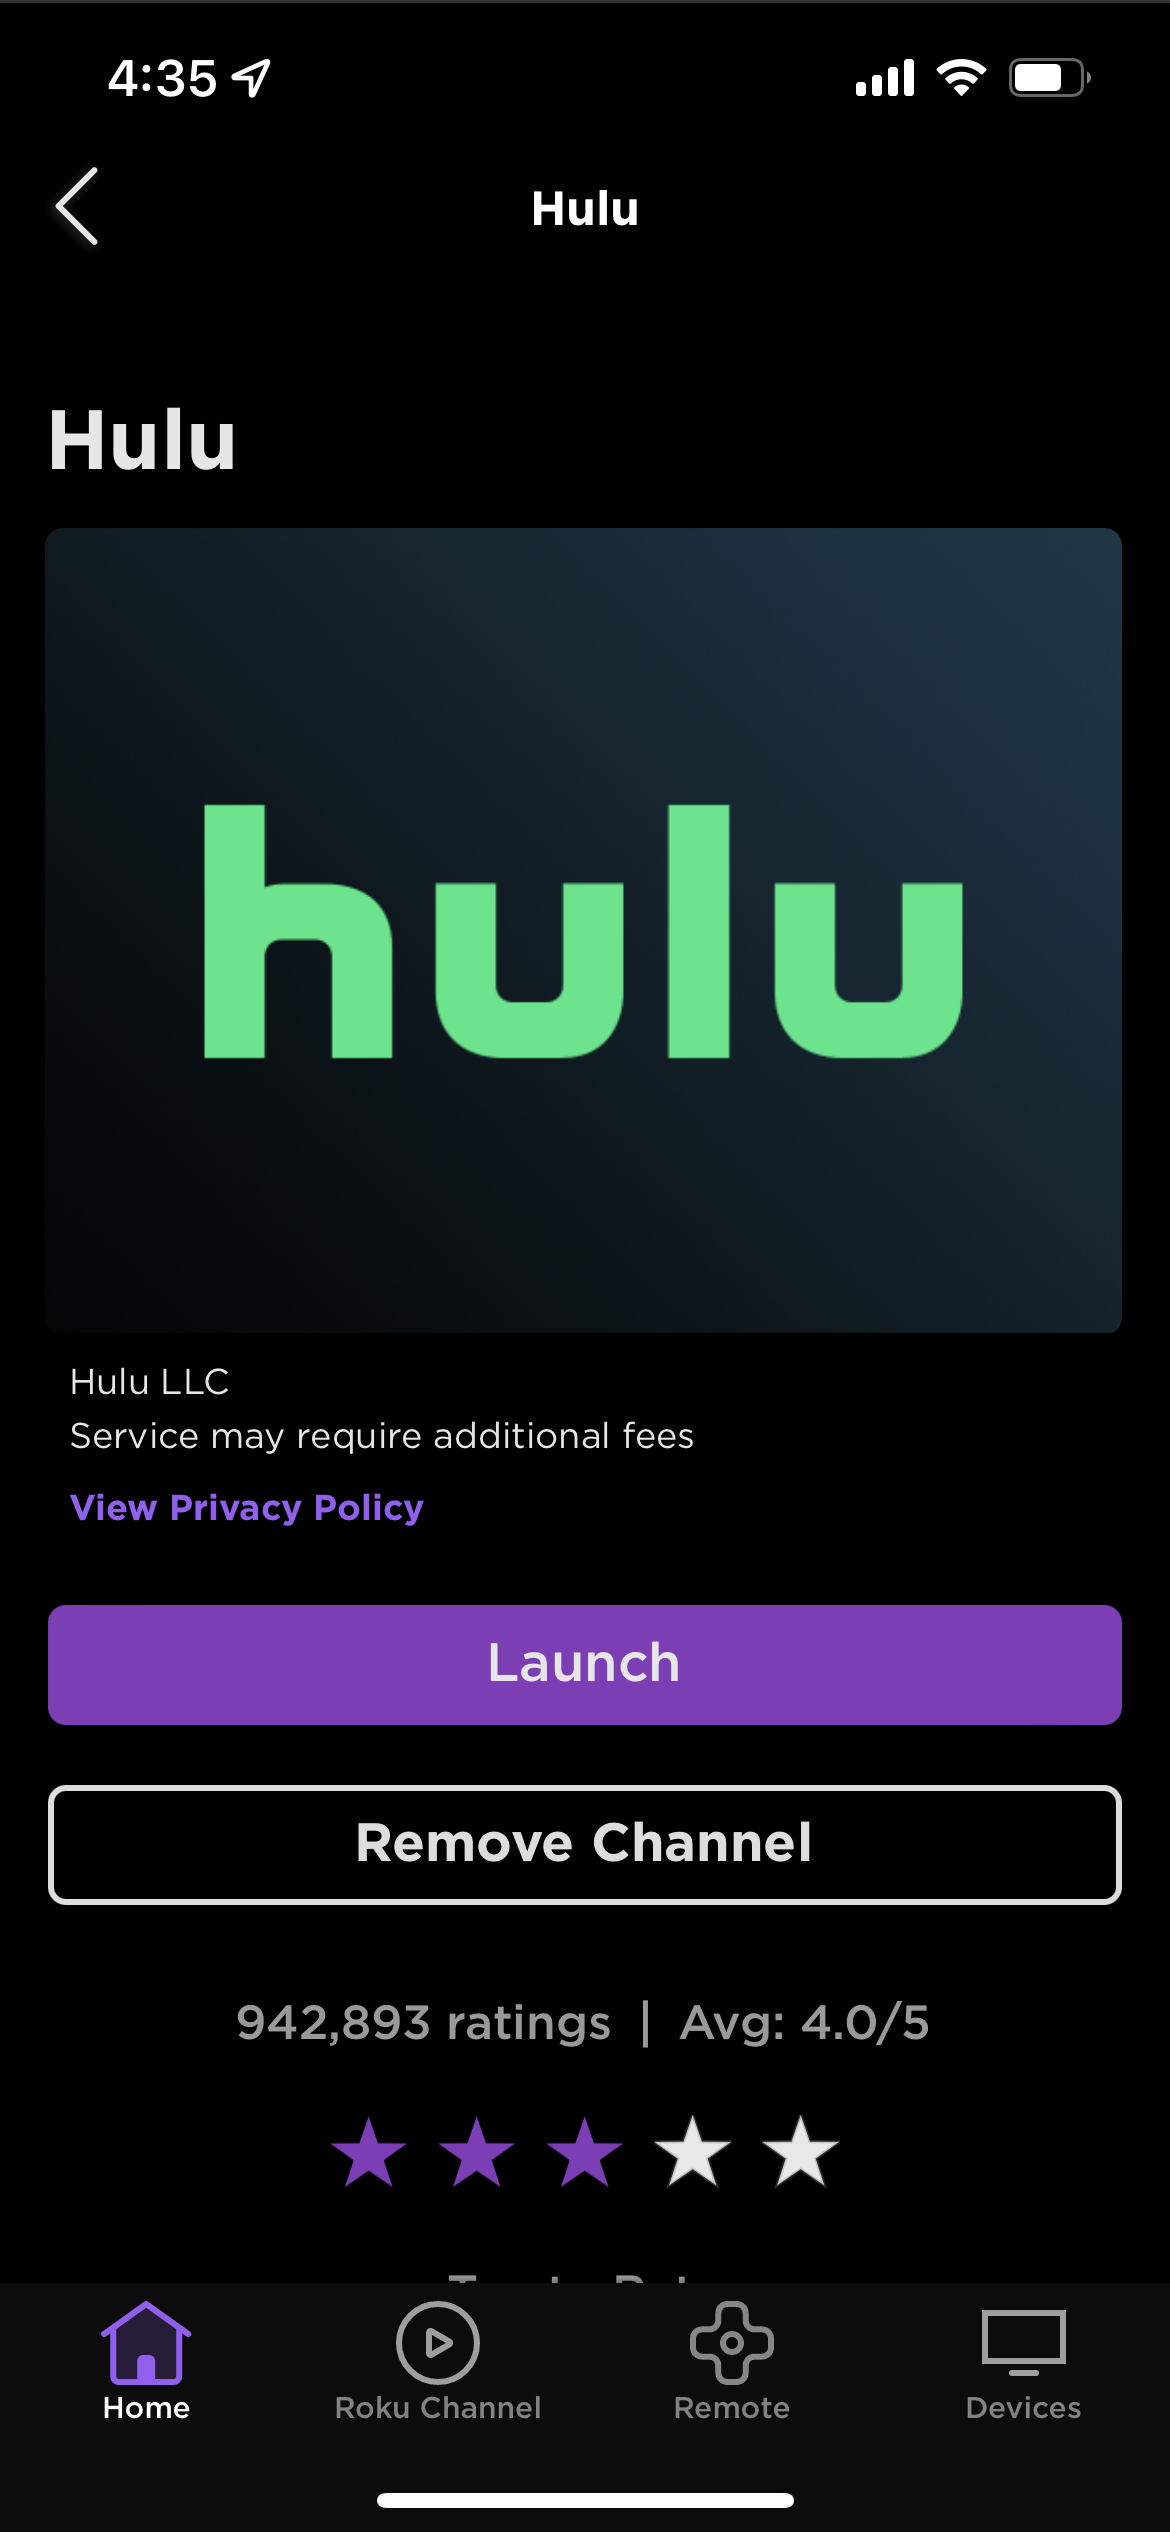 The Hulu Roku app listing on mobile